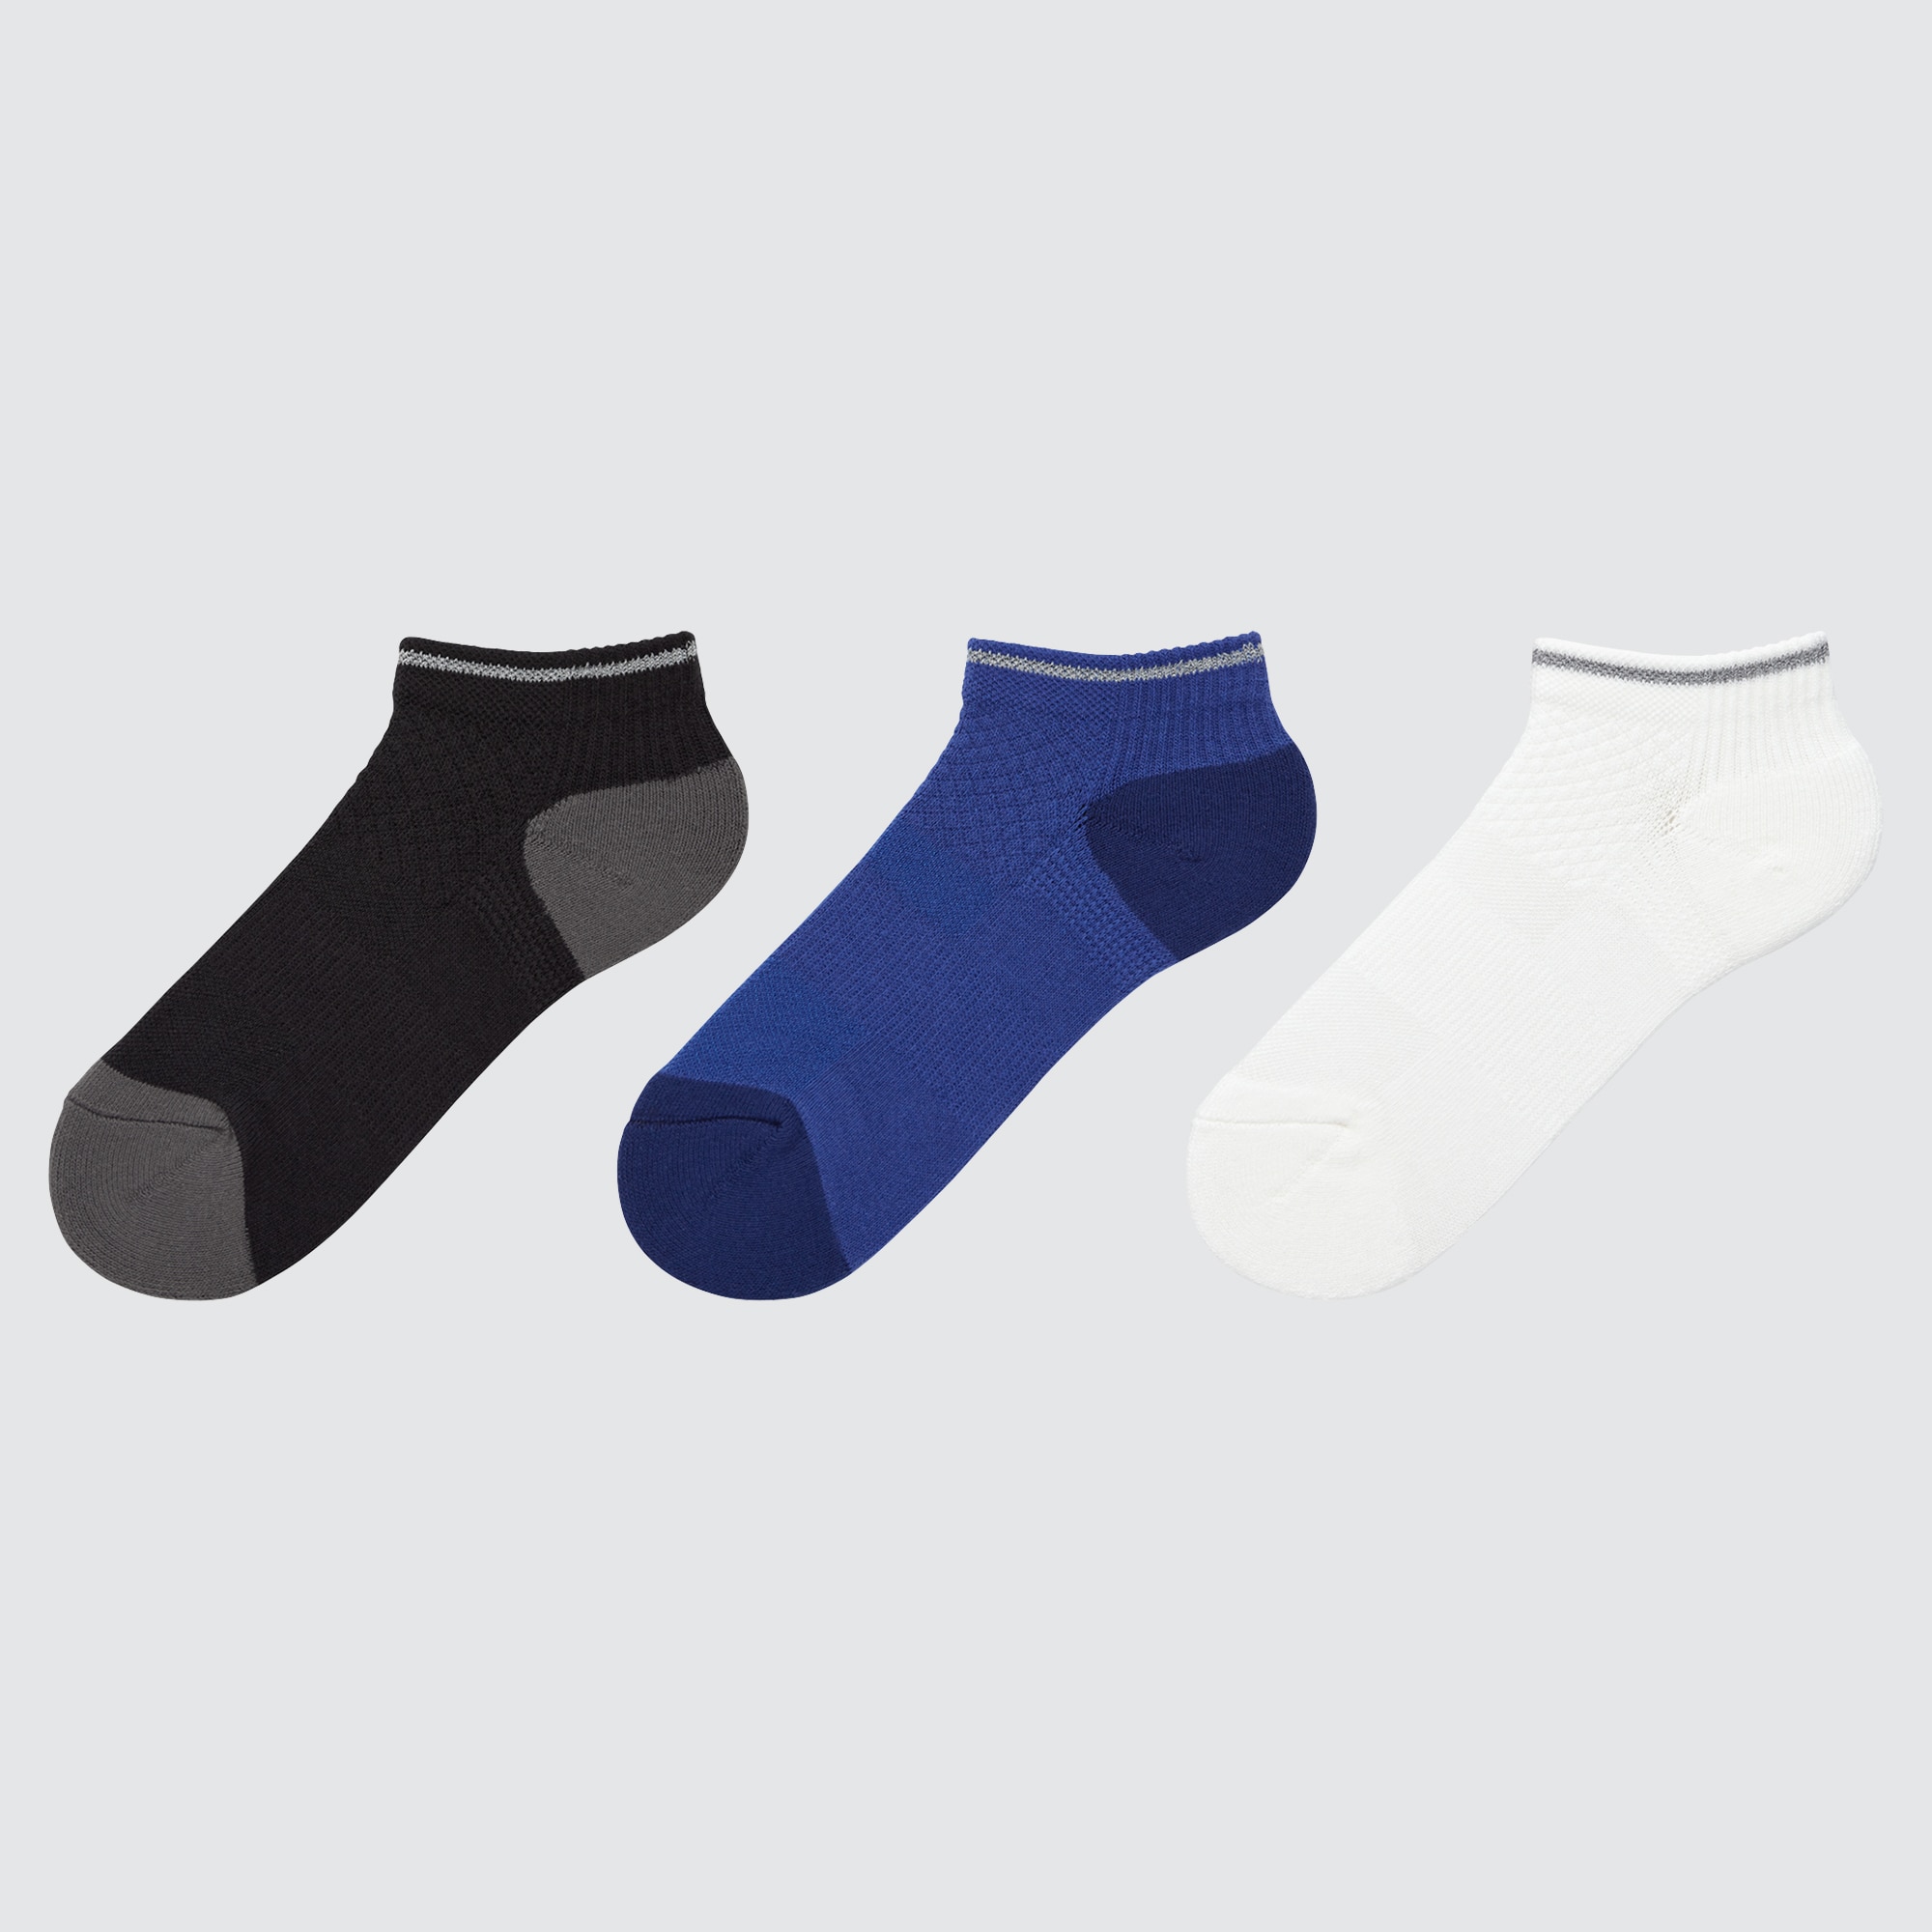 Носки UNIQLO 3 пары, темно-серый носки детские 3 пары tuosite tss1802 1 35 38 серый черный темно серый